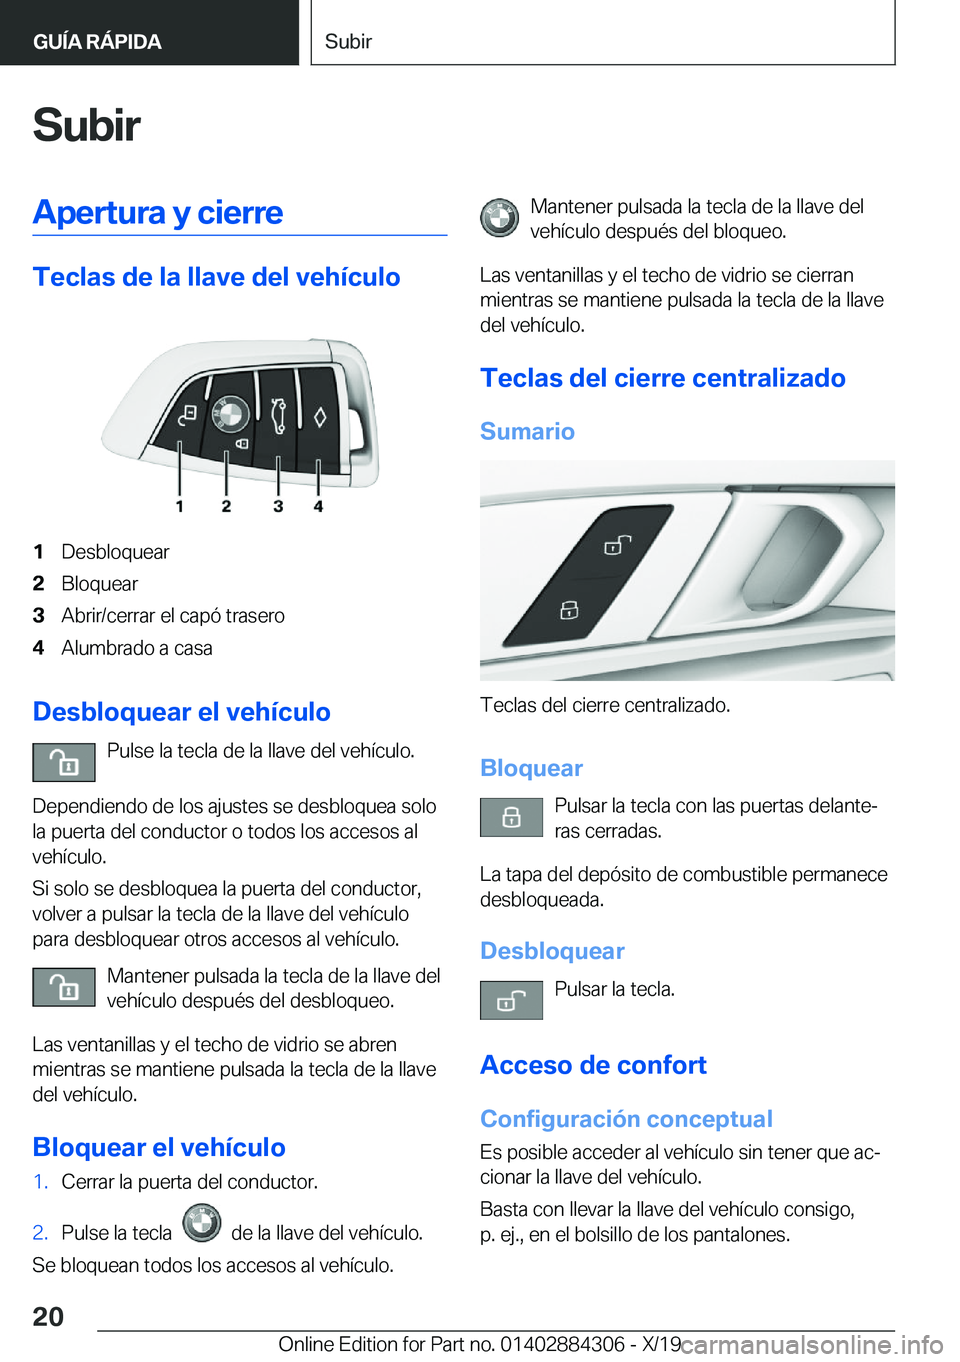 BMW 8 SERIES GRAN COUPE 2020  Manuales de Empleo (in Spanish) �S�u�b�i�r�A�p�e�r�t�u�r�a��y��c�i�e�r�r�e
�T�e�c�l�a�s��d�e��l�a��l�l�a�v�e��d�e�l��v�e�h�